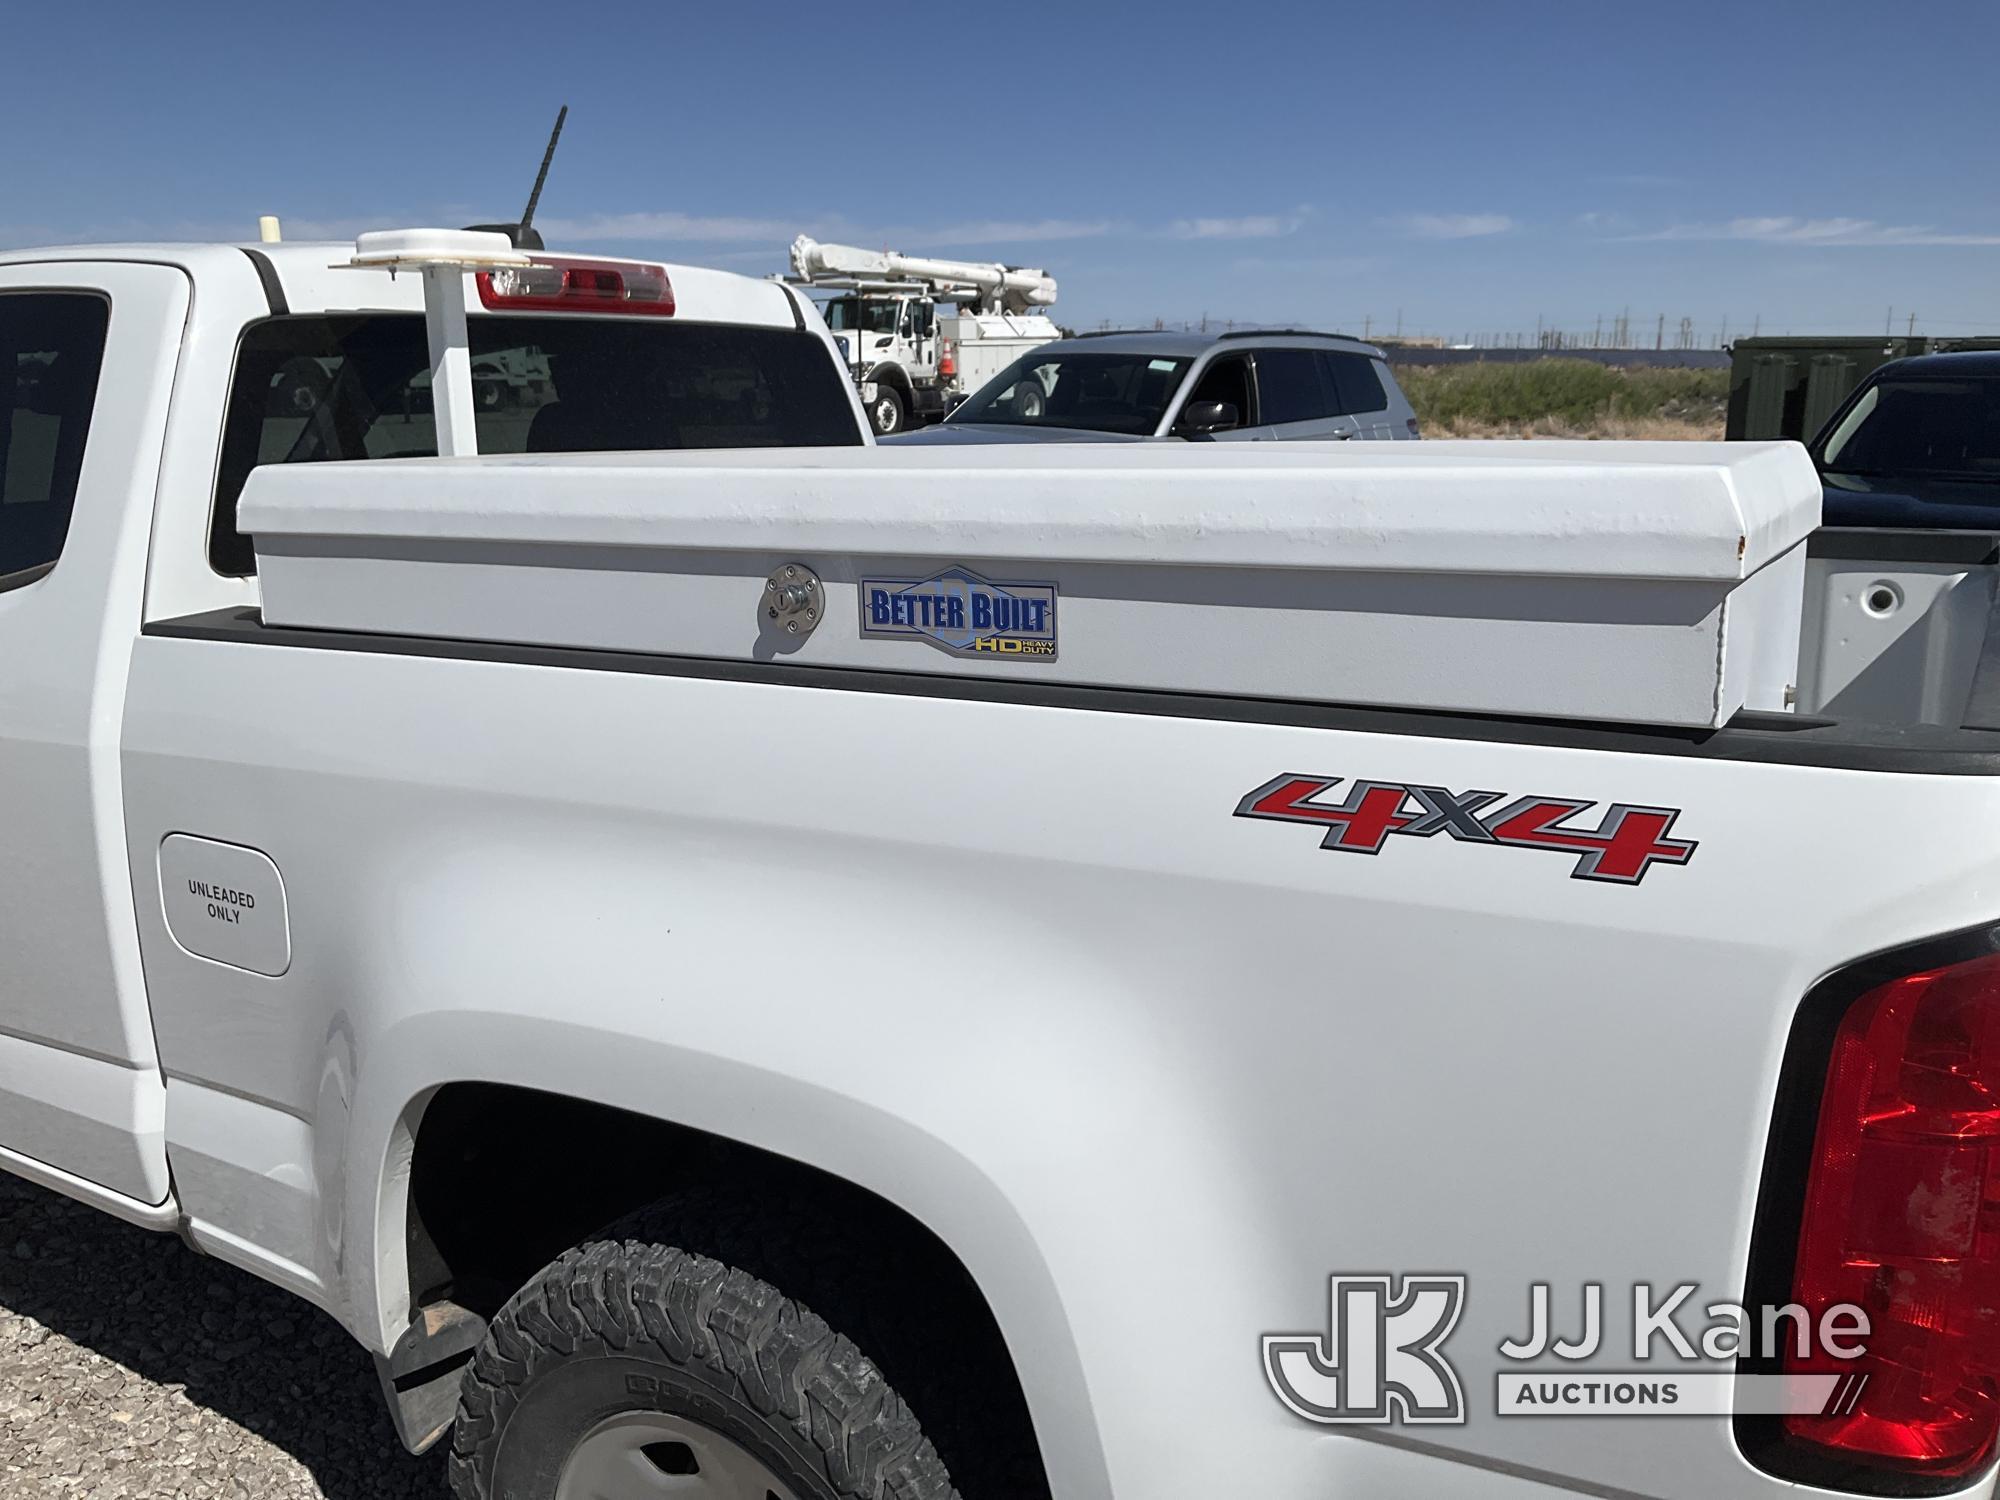 (El Paso, TX) 2016 Chevrolet Colorado 4x4 Extended-Cab Pickup Truck Runs & Drives) (Jump To Start